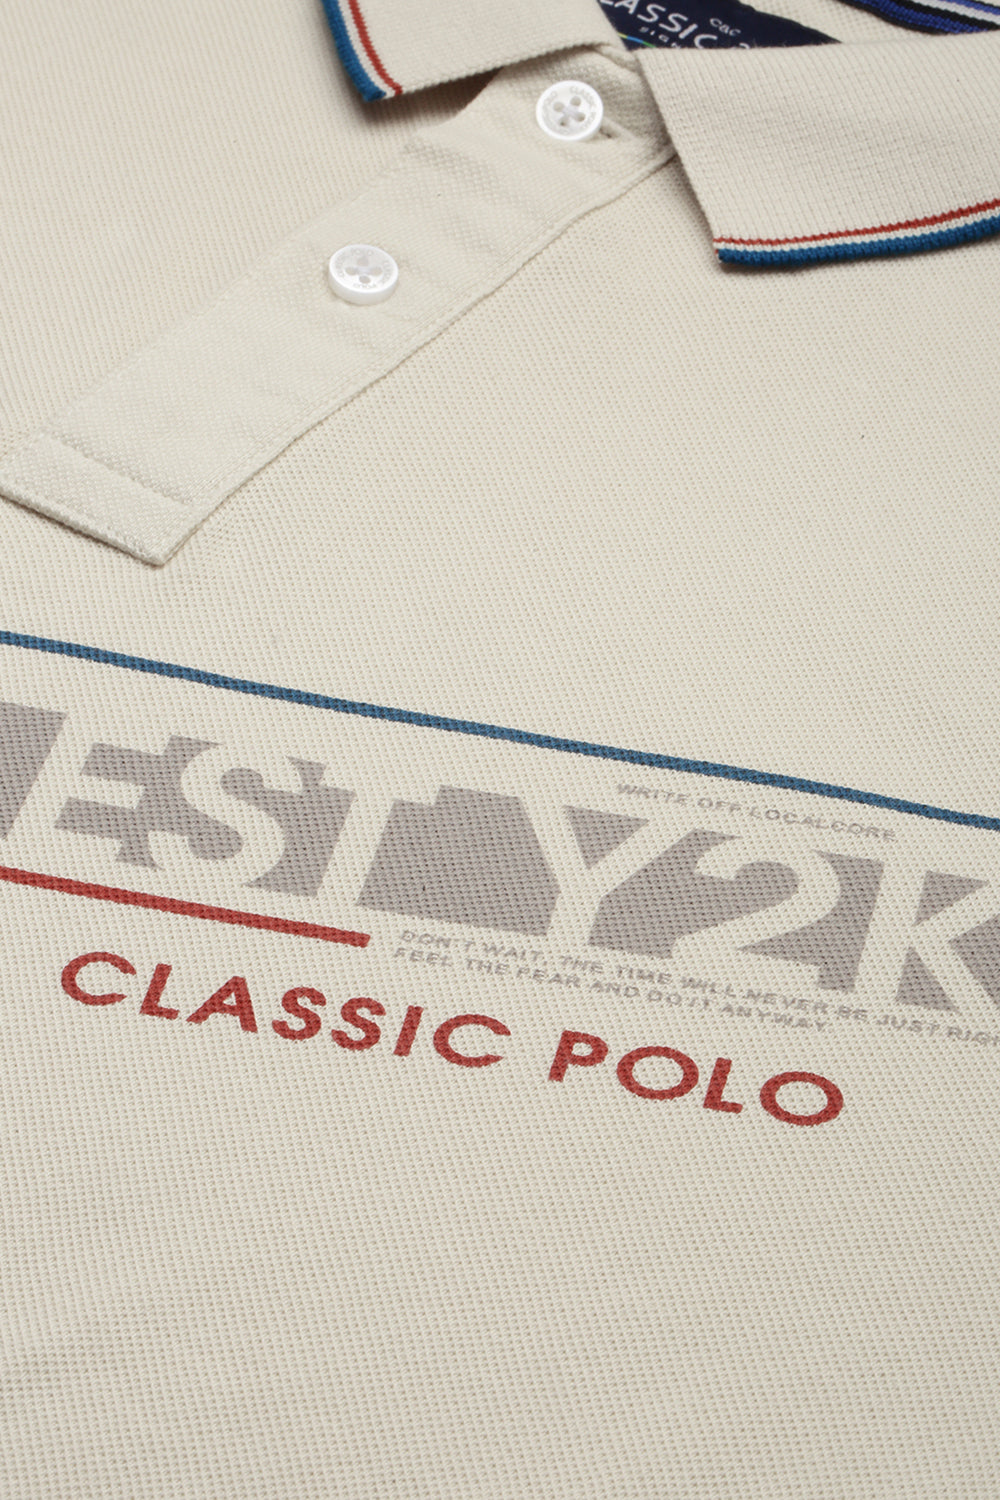 Classic Polo